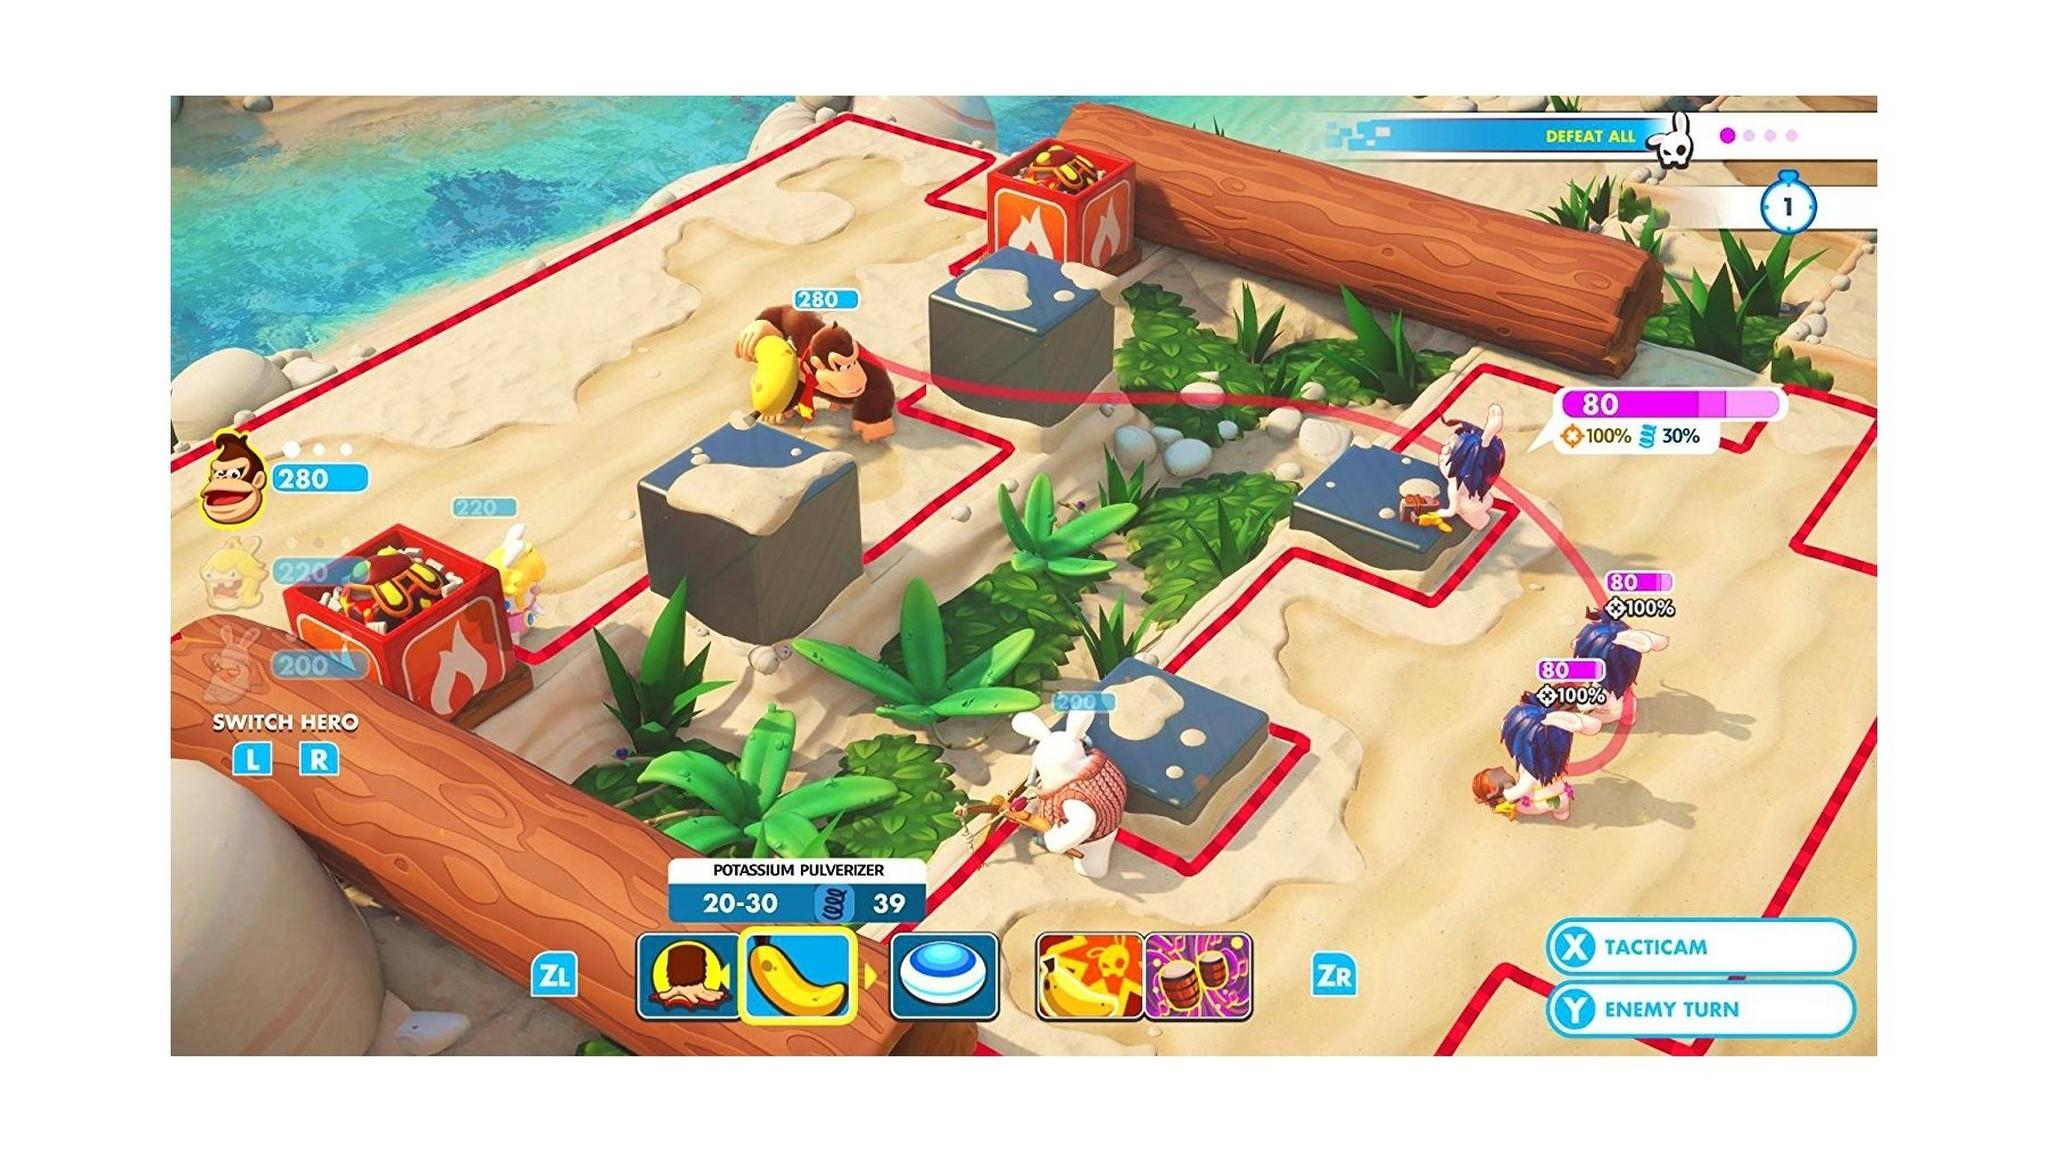 Mario + Rabbids Kingdom Battle Gold Edition - Nintendo Switch